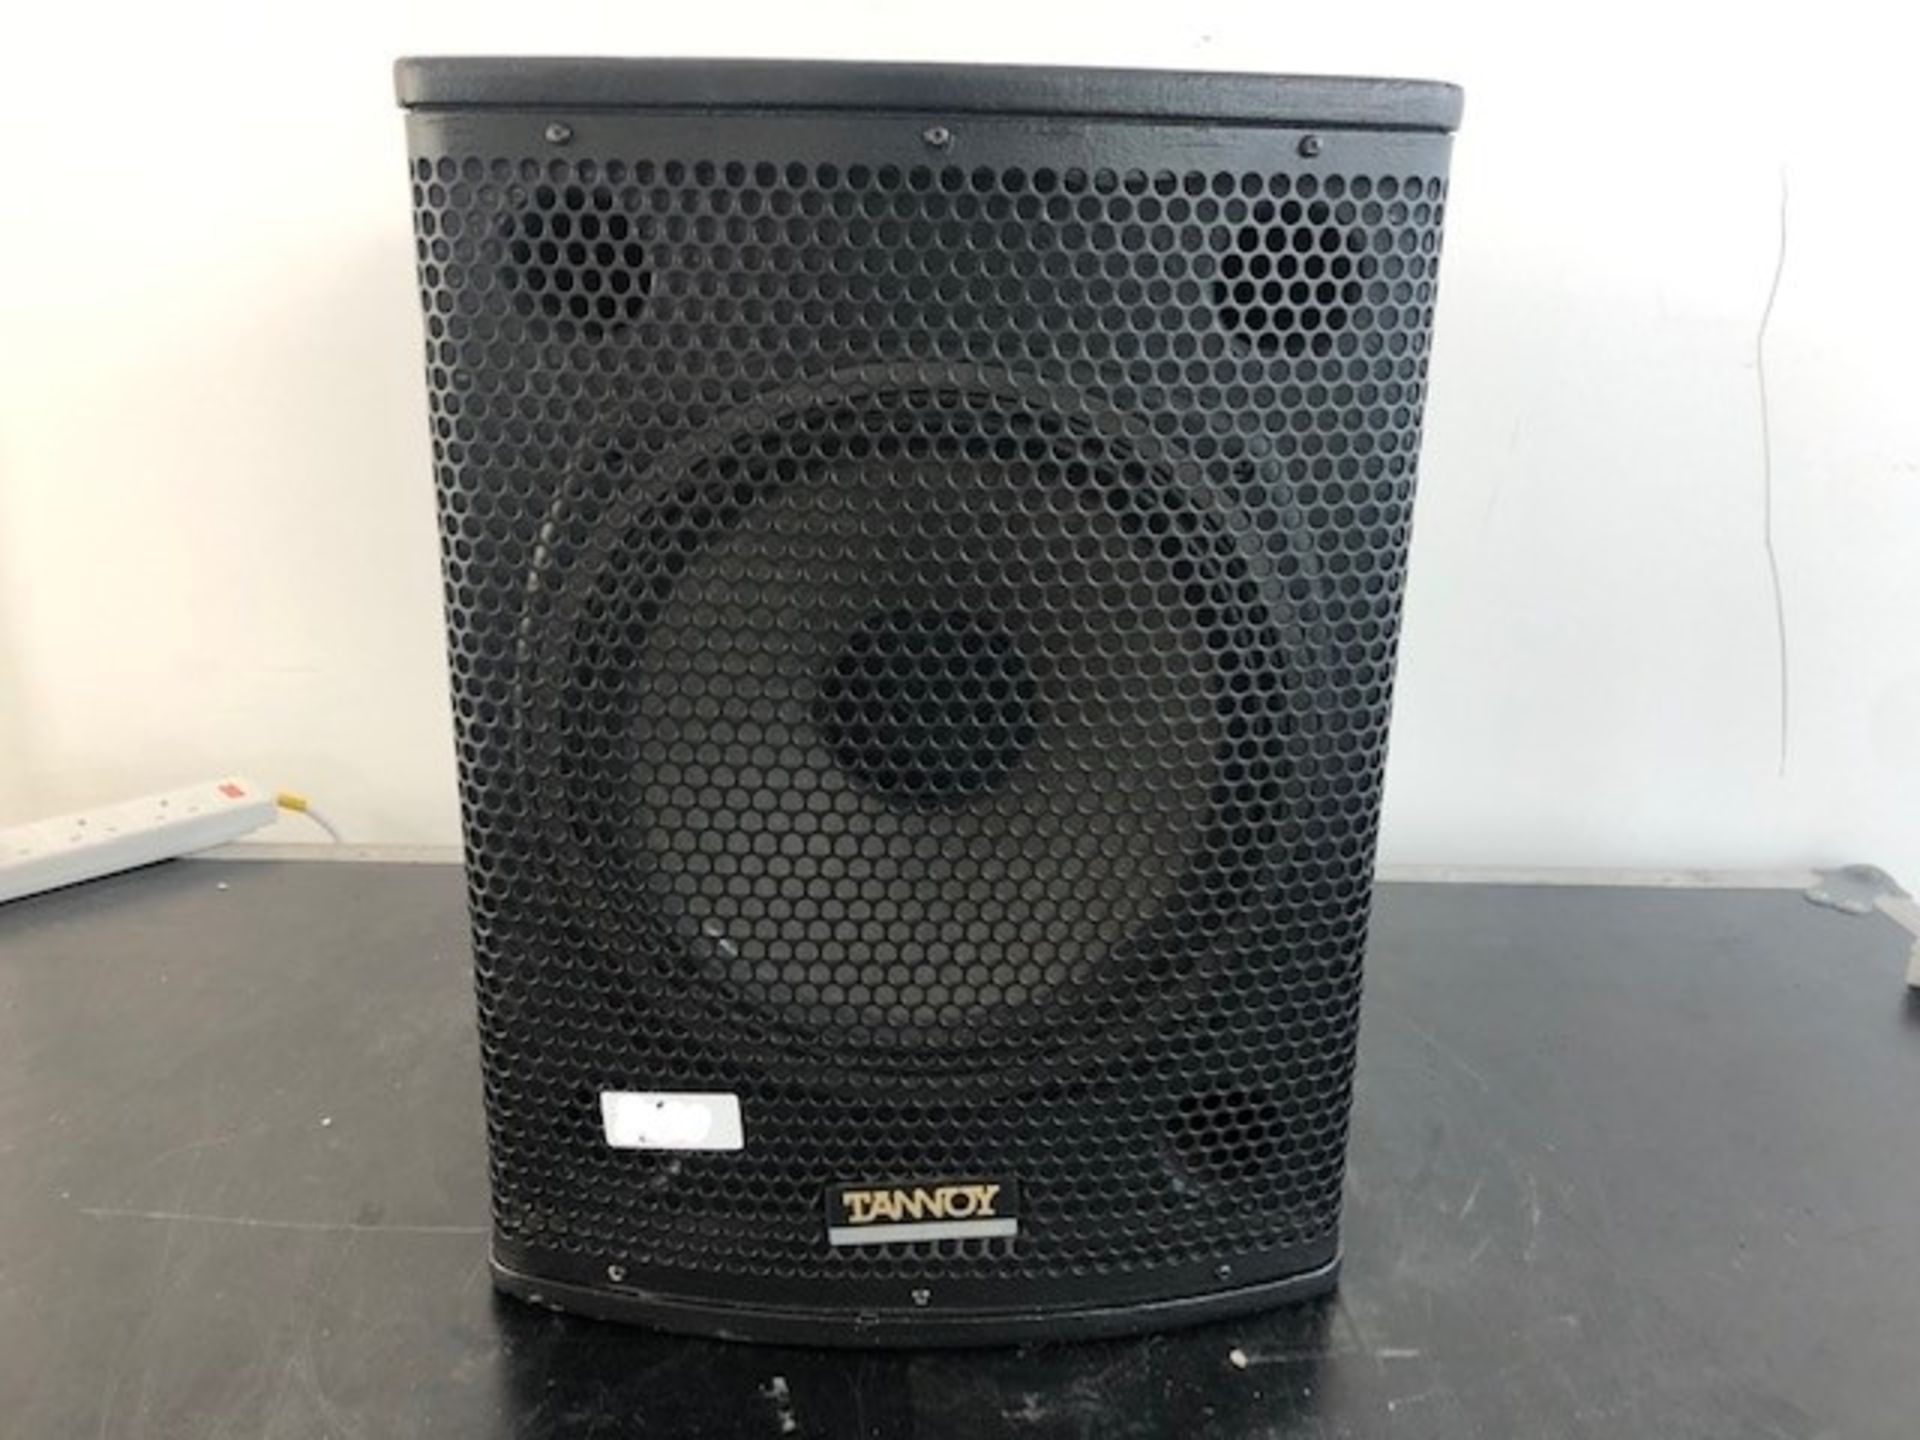 2 x Tannoy 12 inch Speakers In Bag - Ref: 461 - CL581 - Location: Altrincham WA14